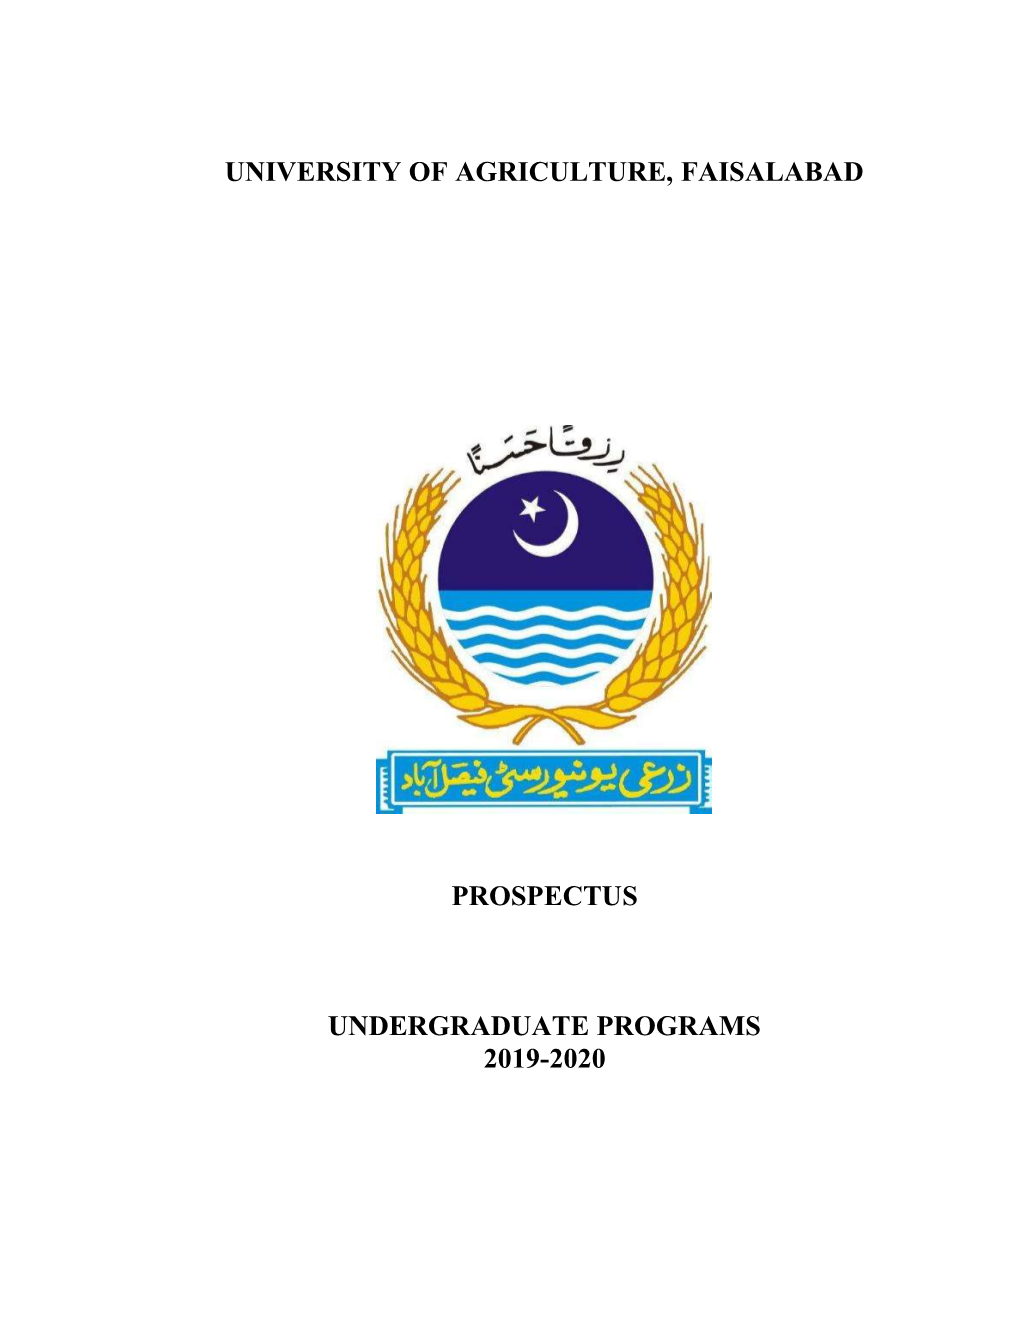 University of Agriculture, Faisalabad Prospectus